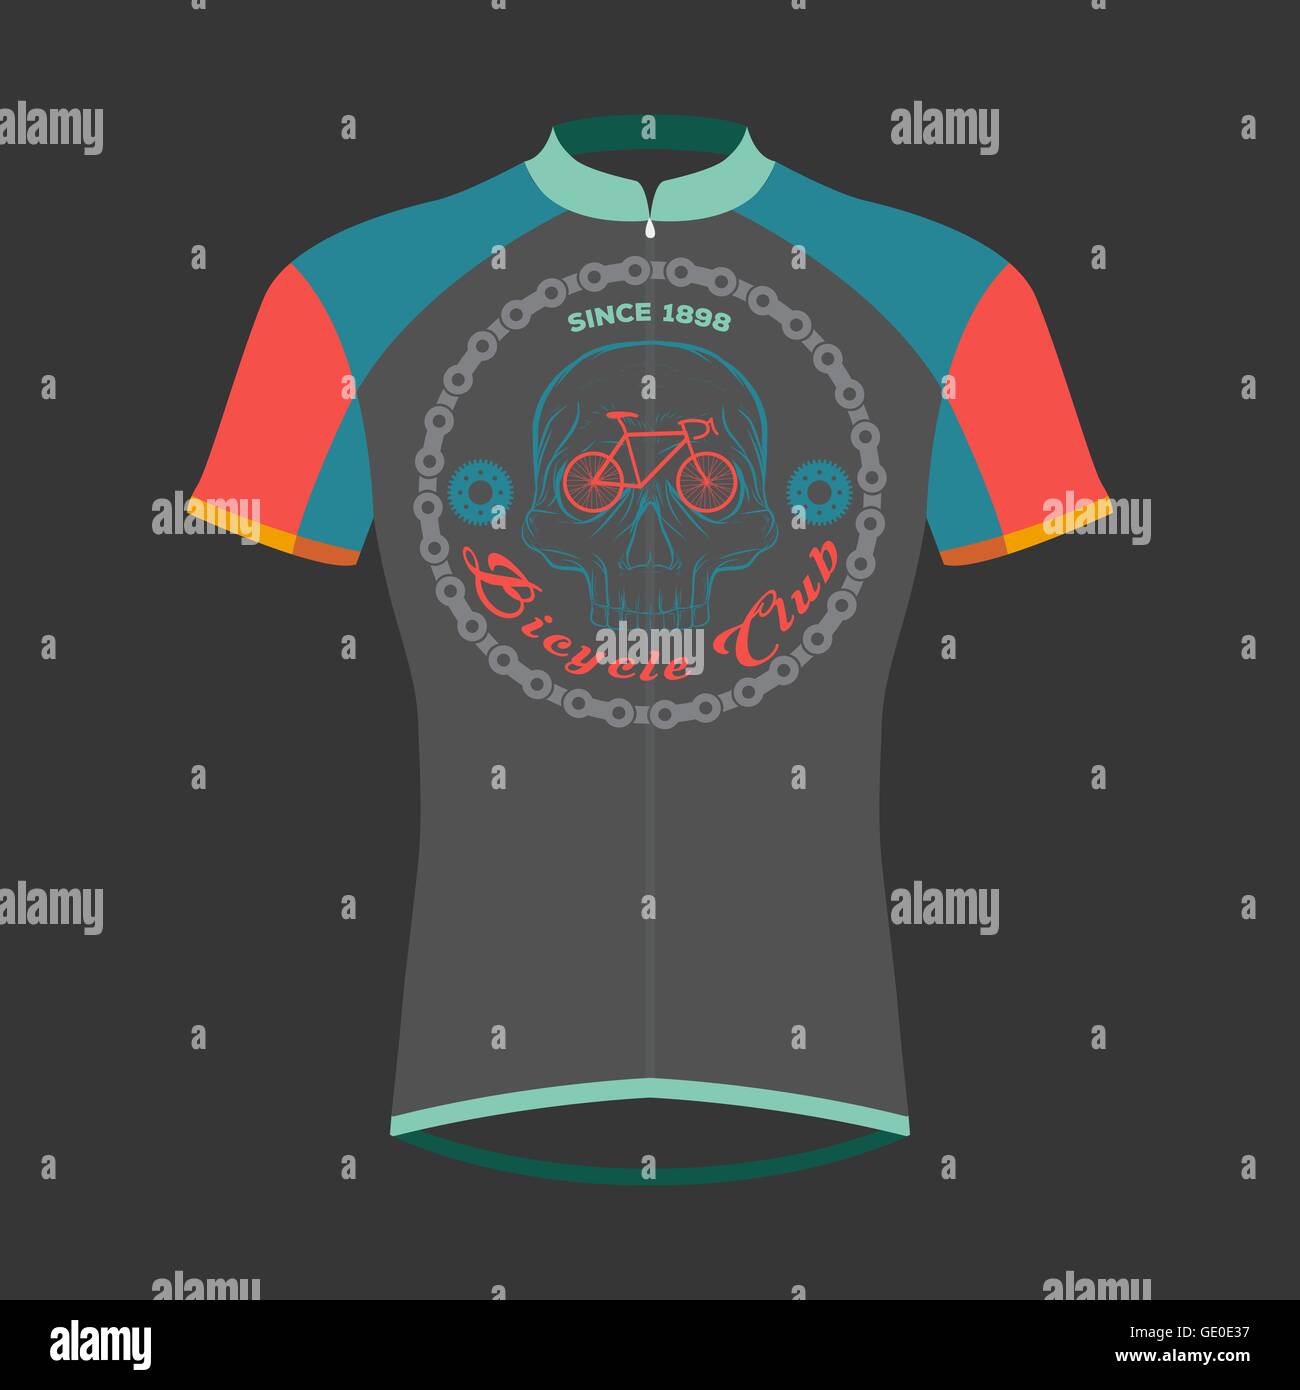 cycling shirts design Stock Vector